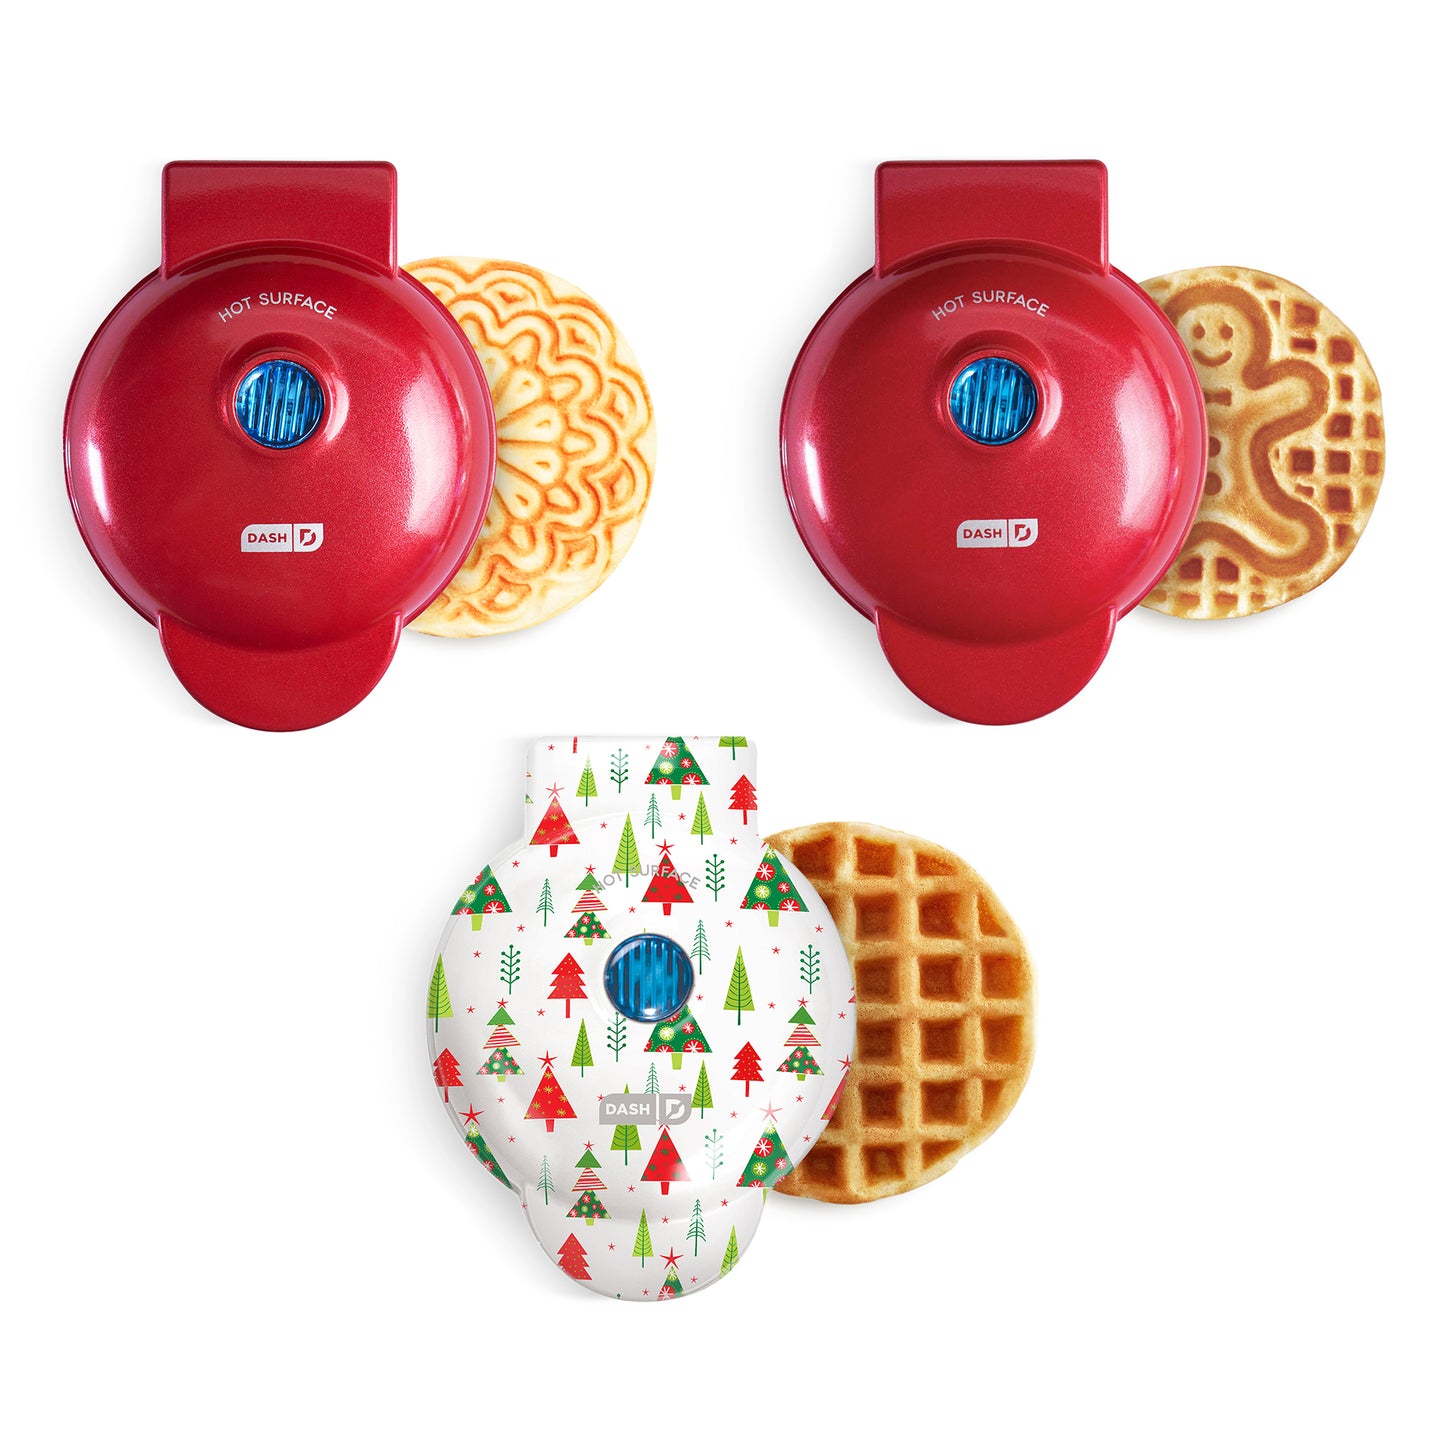 Dash Holiday Mini Waffle Maker 4”- Christmas Tree & Snowman Winter Christmas